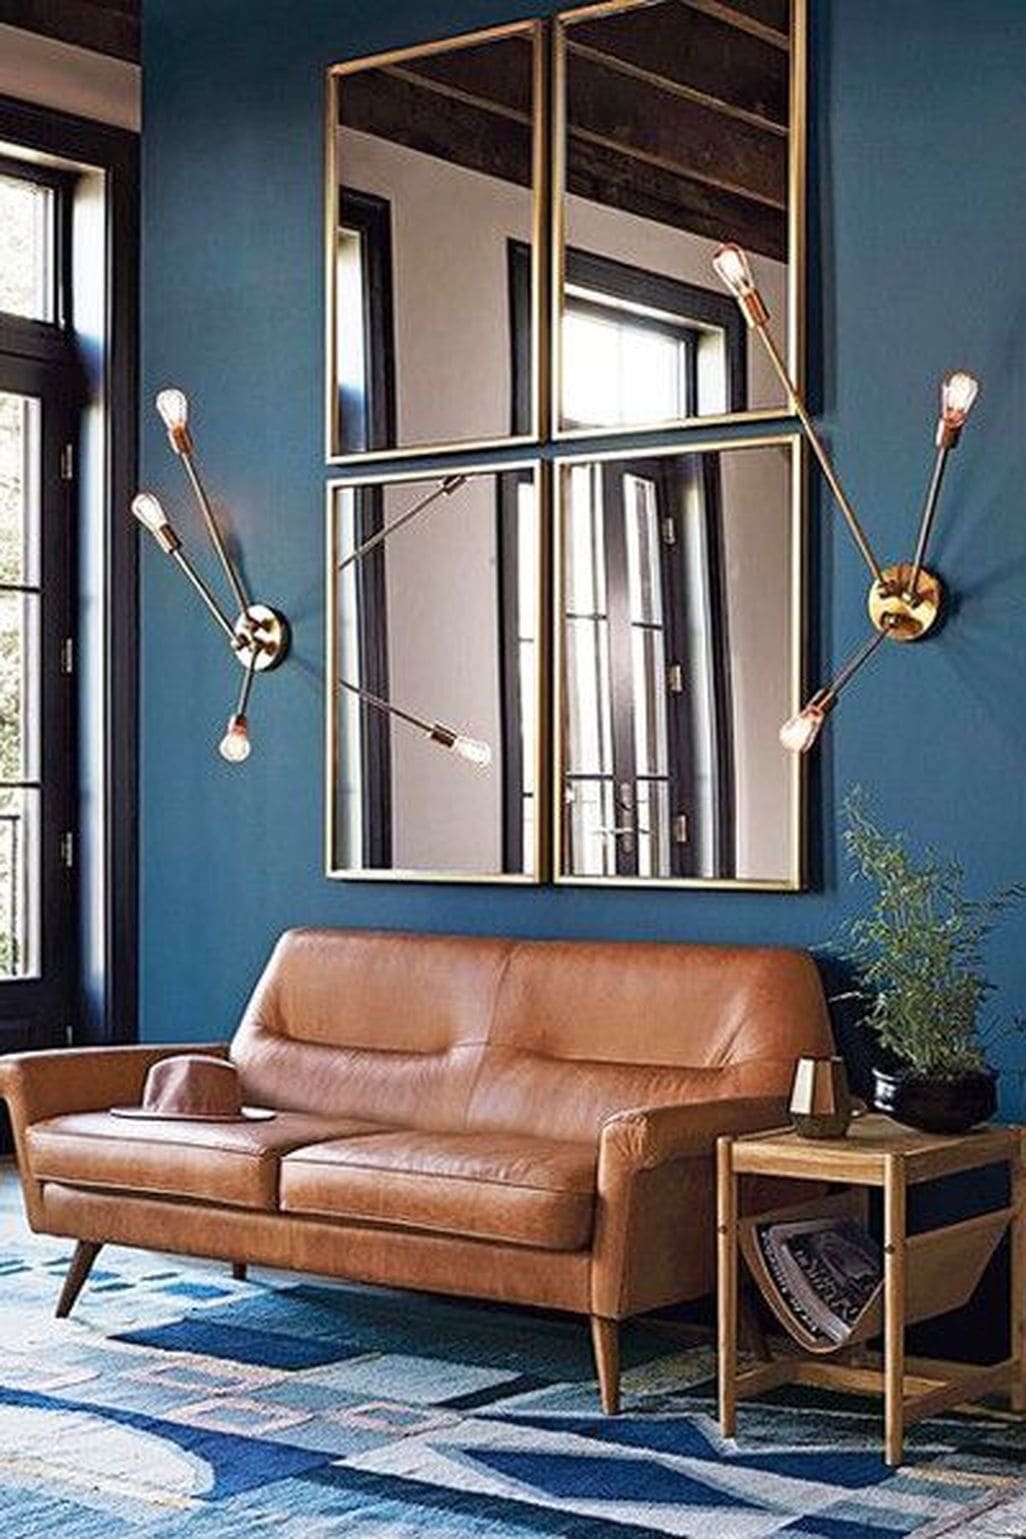 25 living room mirror decorating ideas - 85